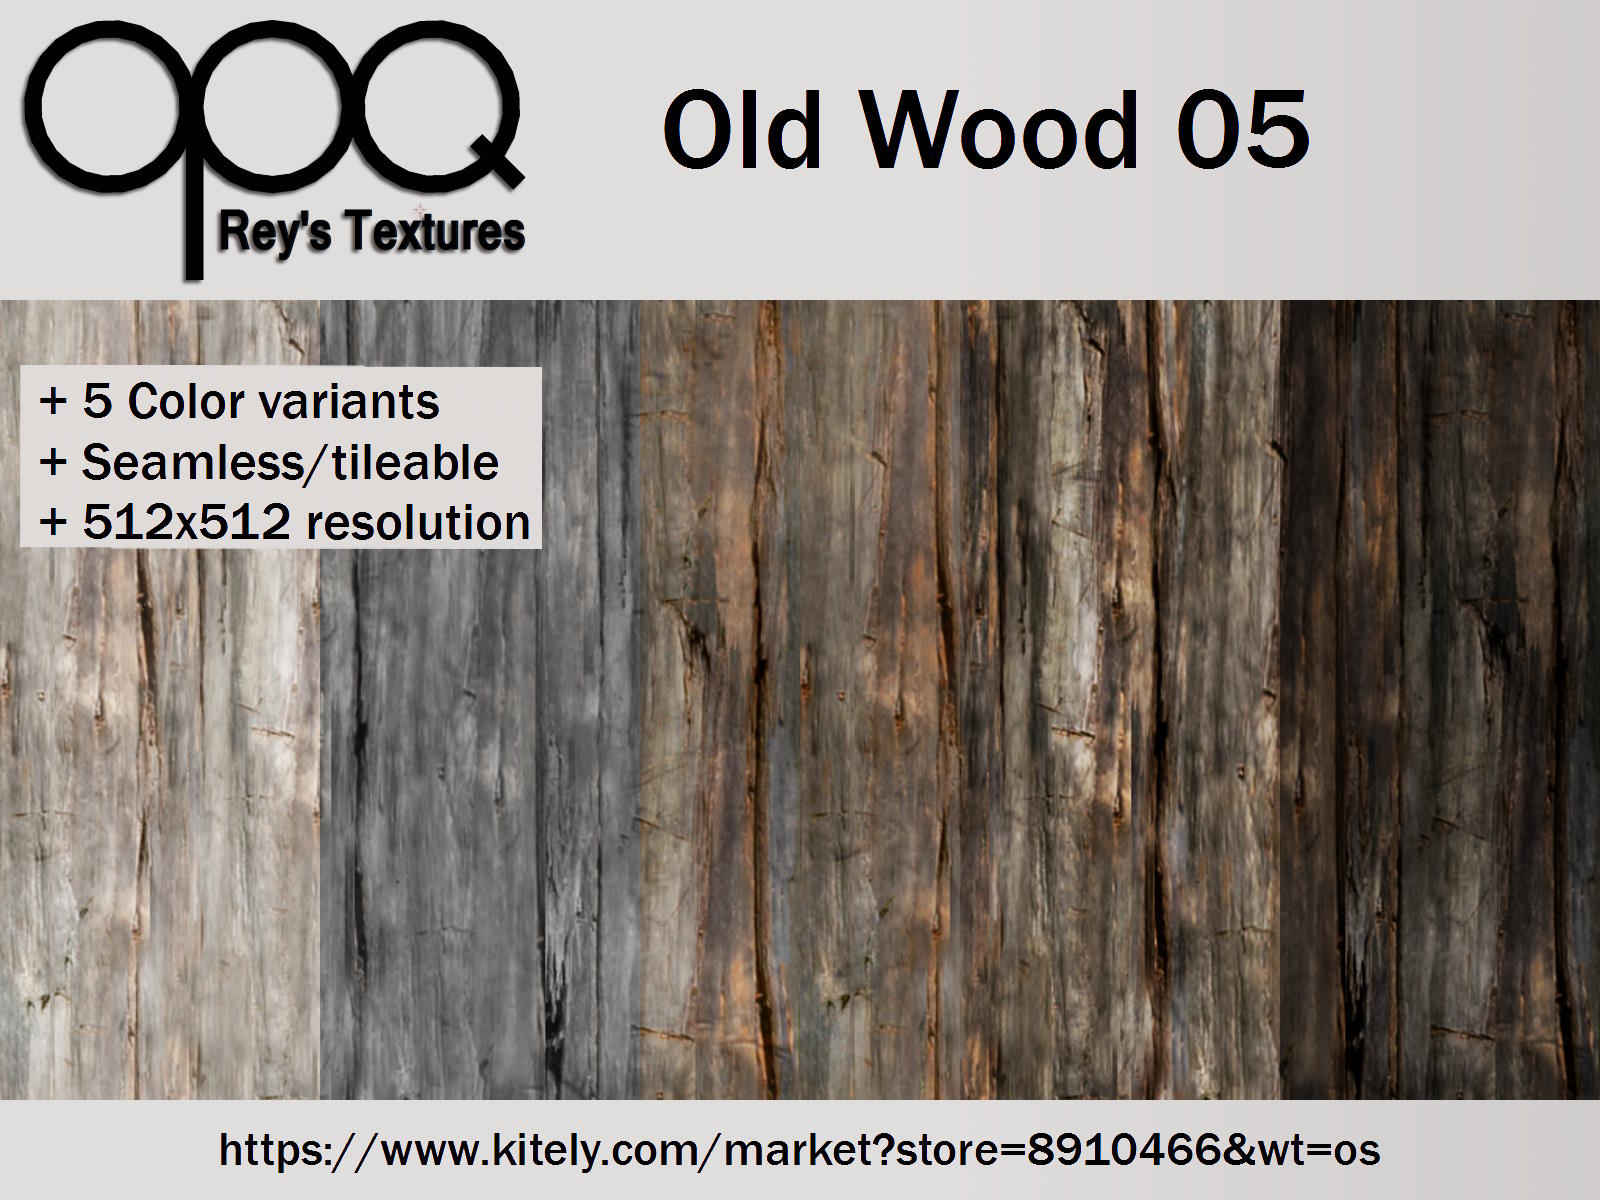 Rey's Old Wood 05 Poster Kitely.jpg